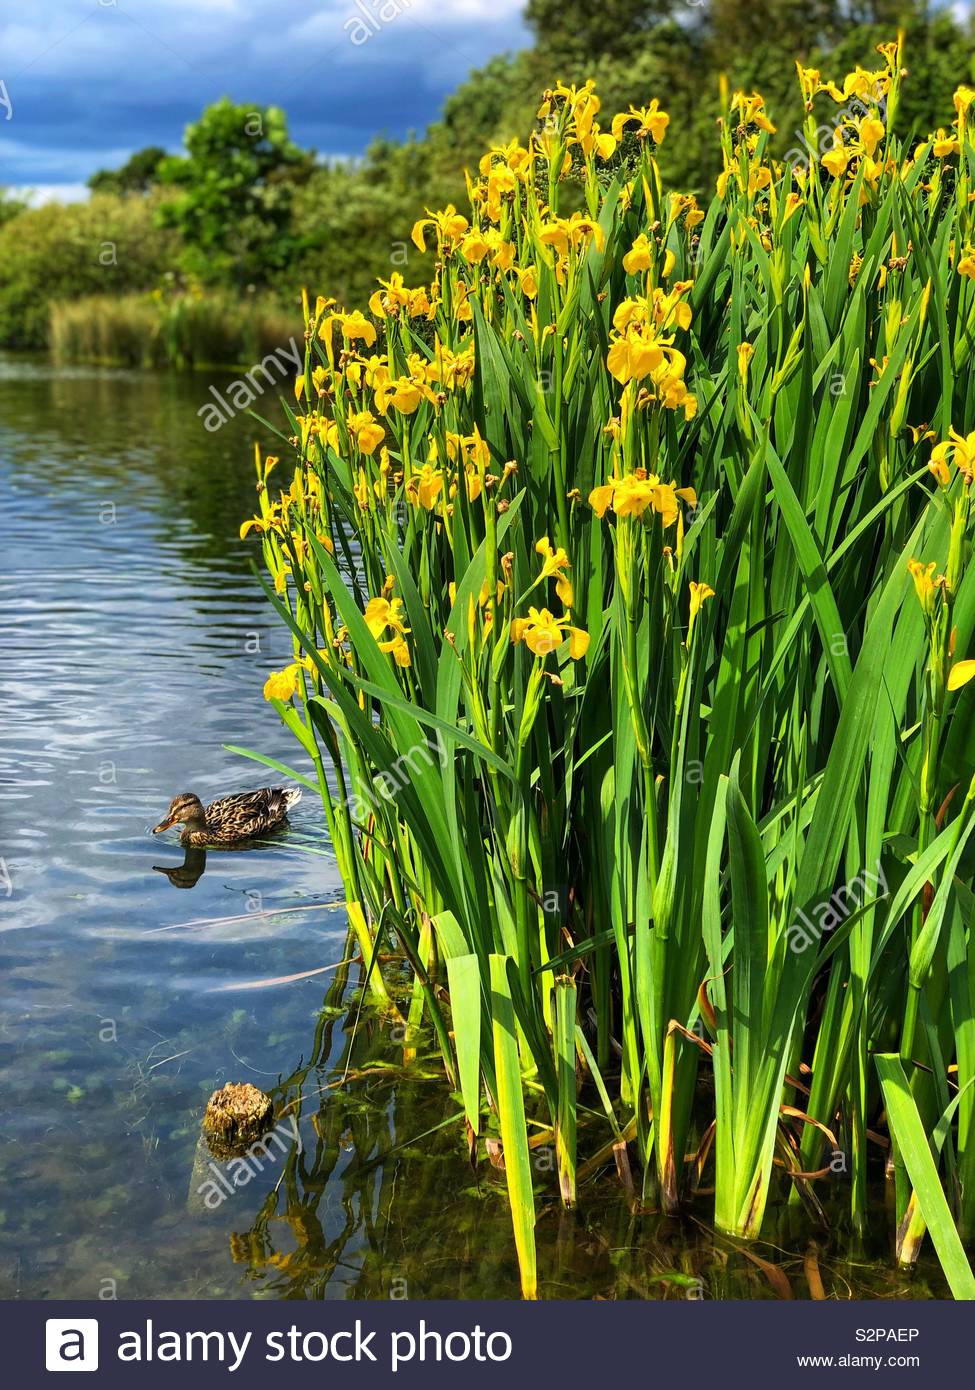 Duck-flower stock photo - Minden Pictures